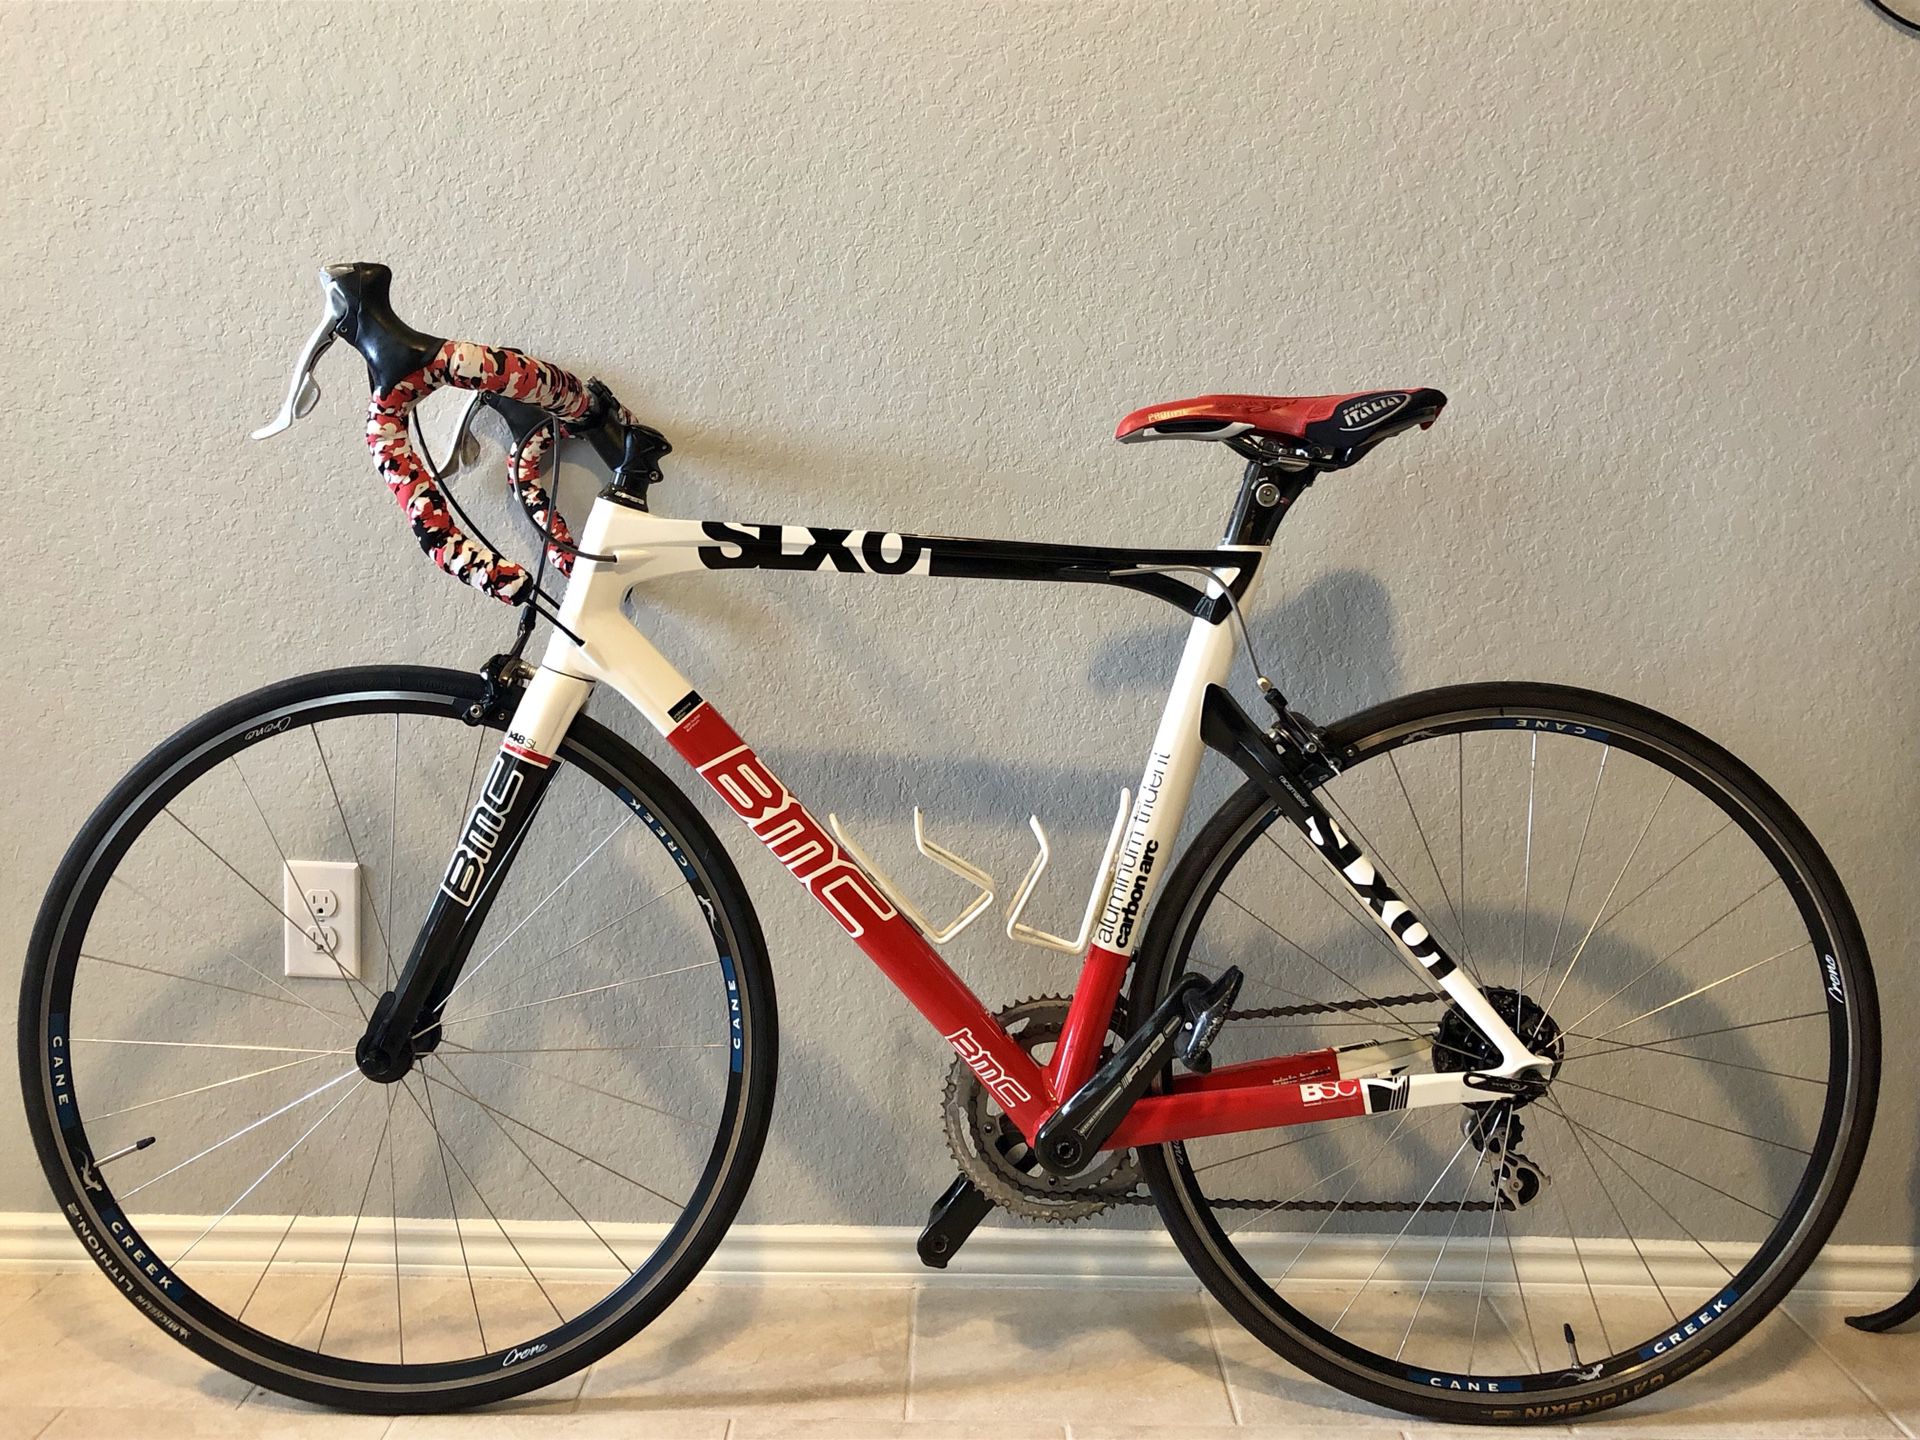 BMC Racemaster SLX01 road bike for Sale in San Antonio, TX - OfferUp